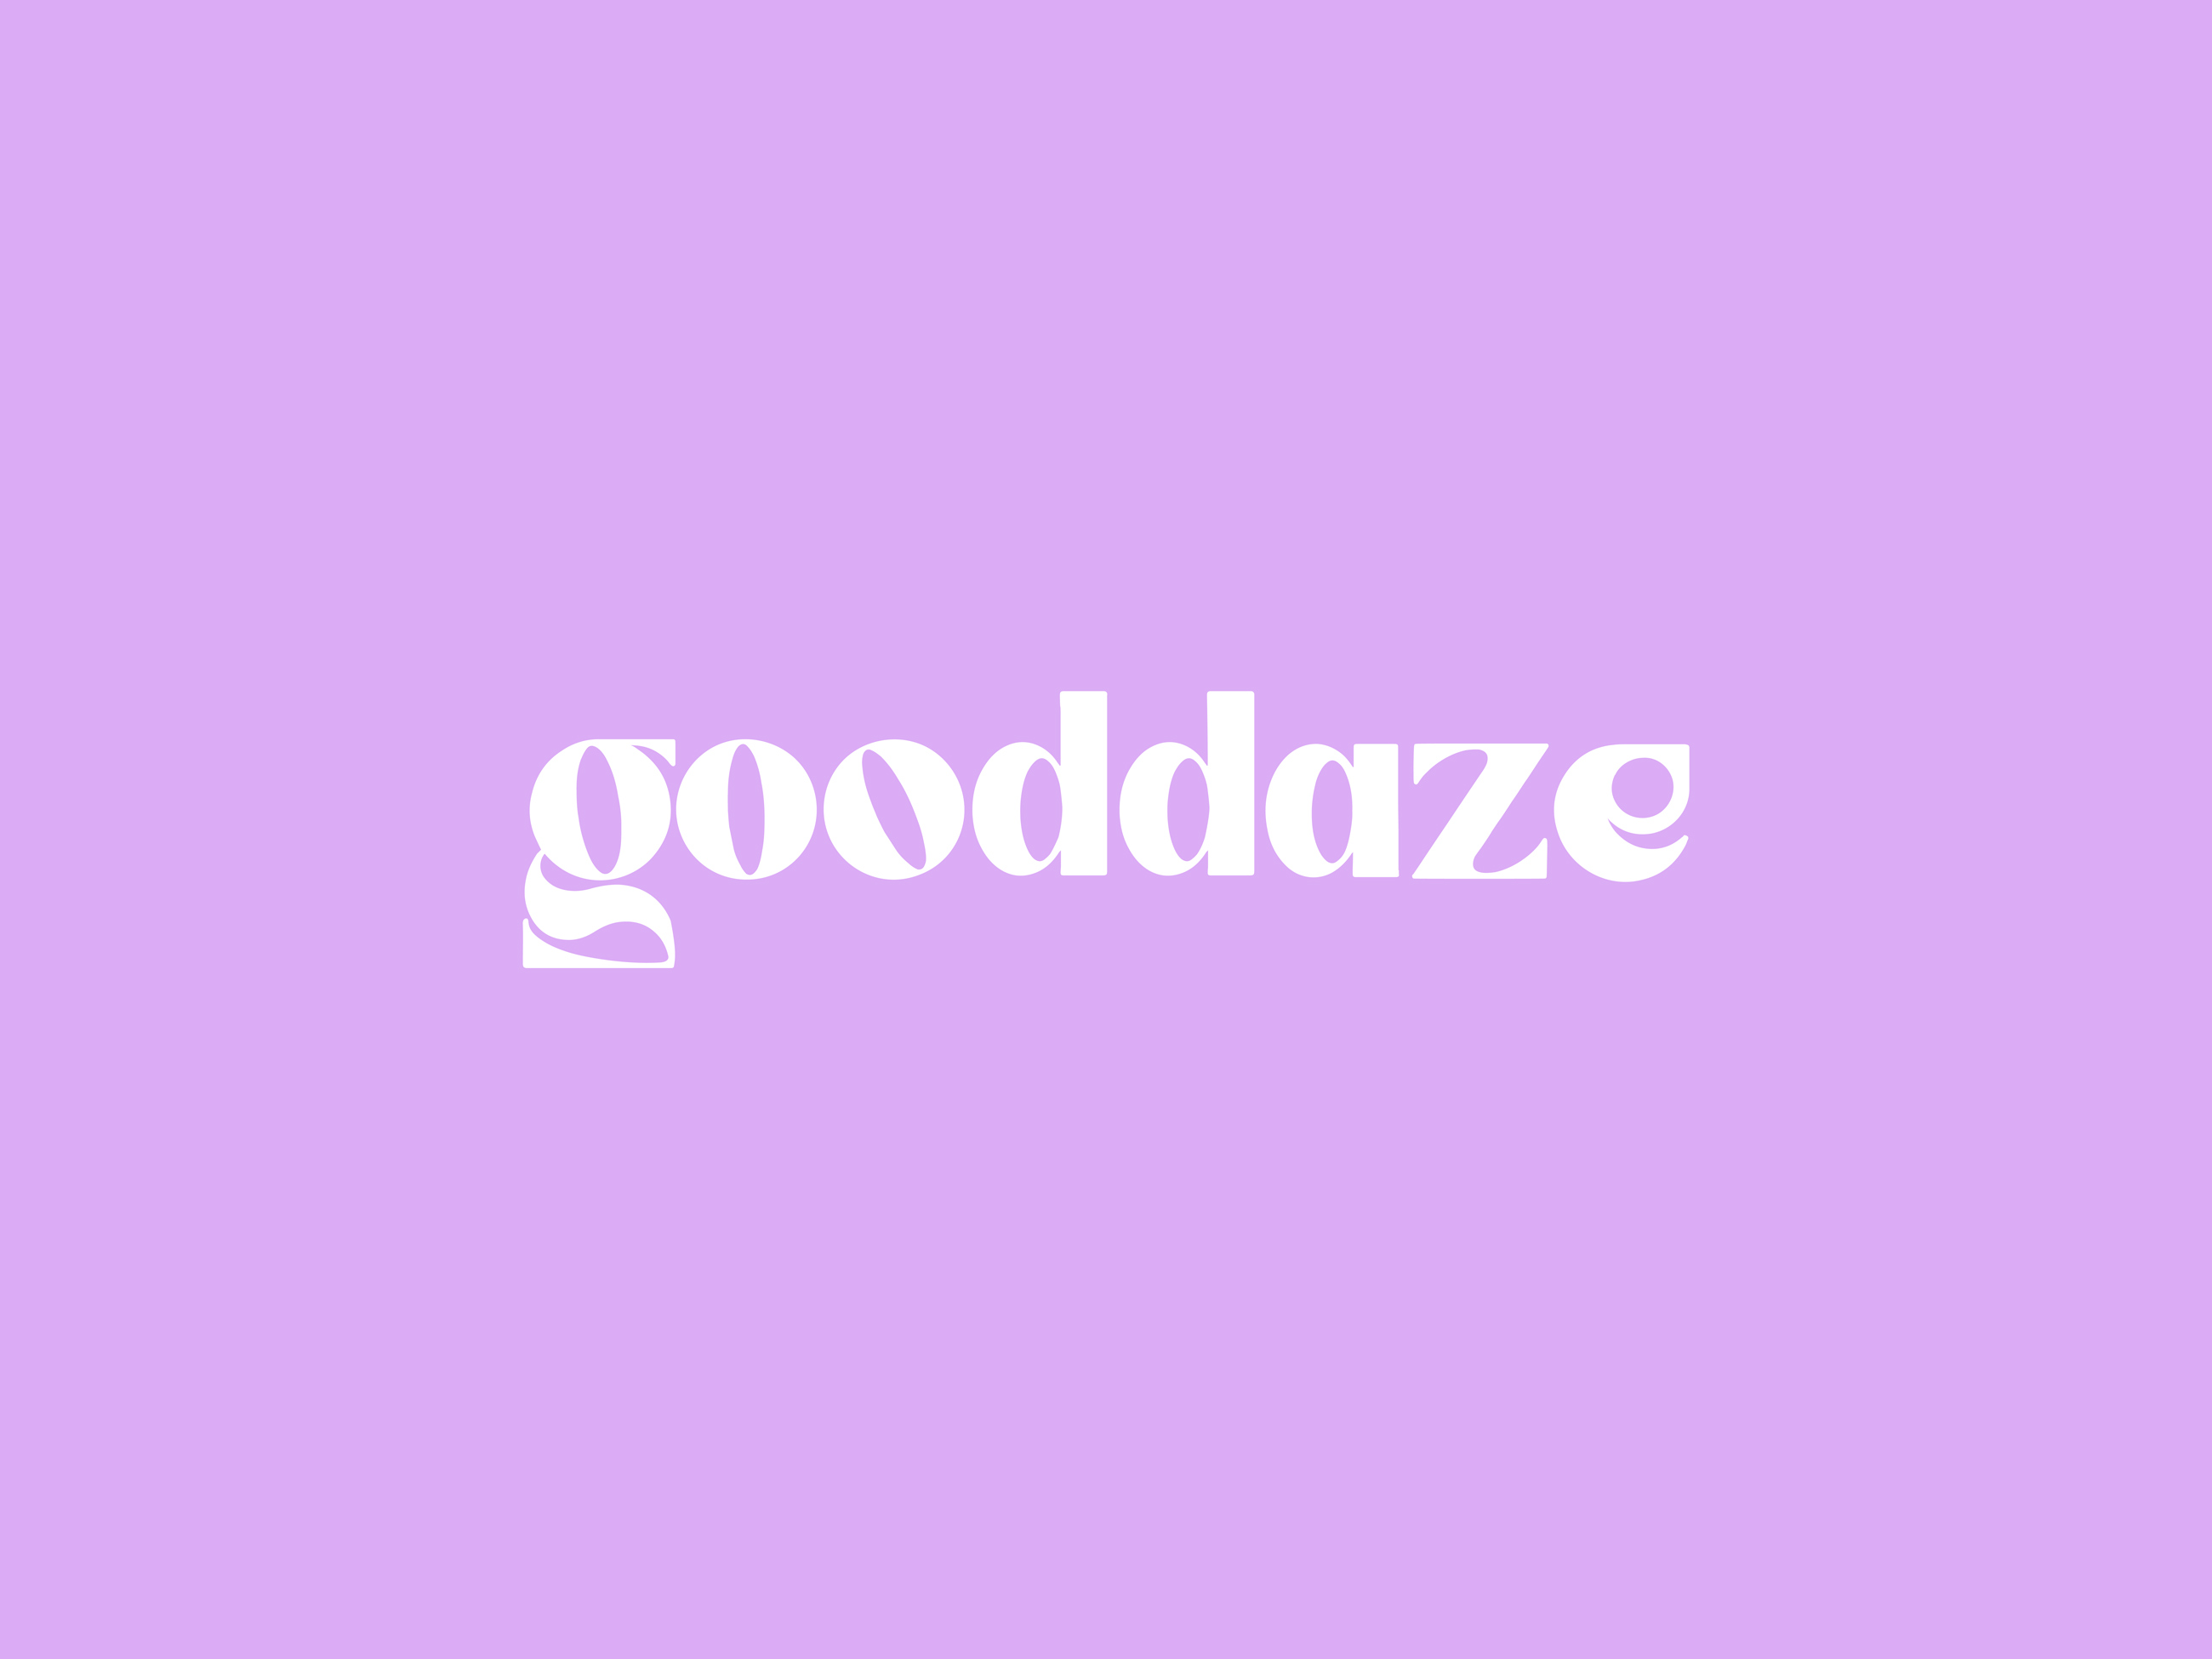 Visualizing Calm: Inside the Design of Gooddaze CBD Gummies